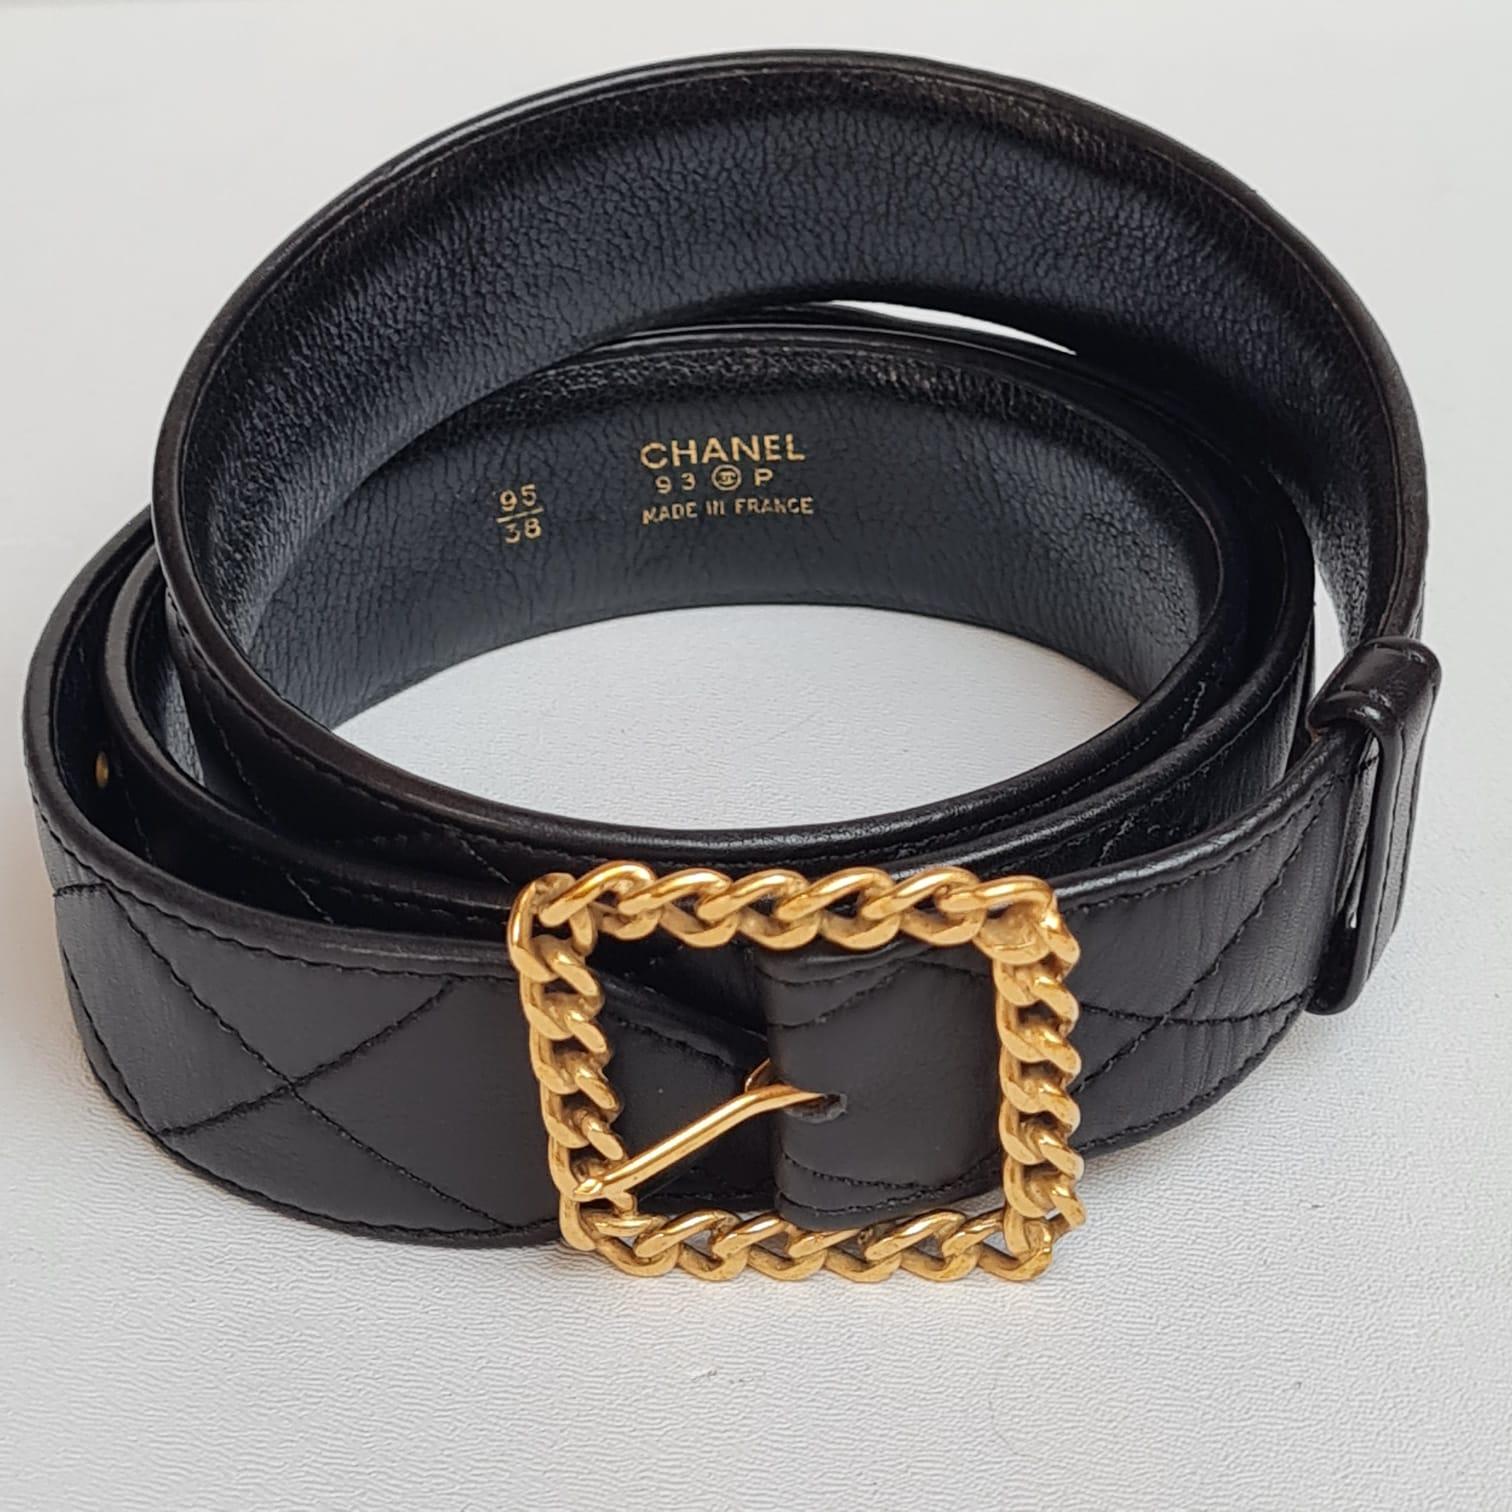 1993 Chanel Vintage Quilted Leather Belt For Sale 2